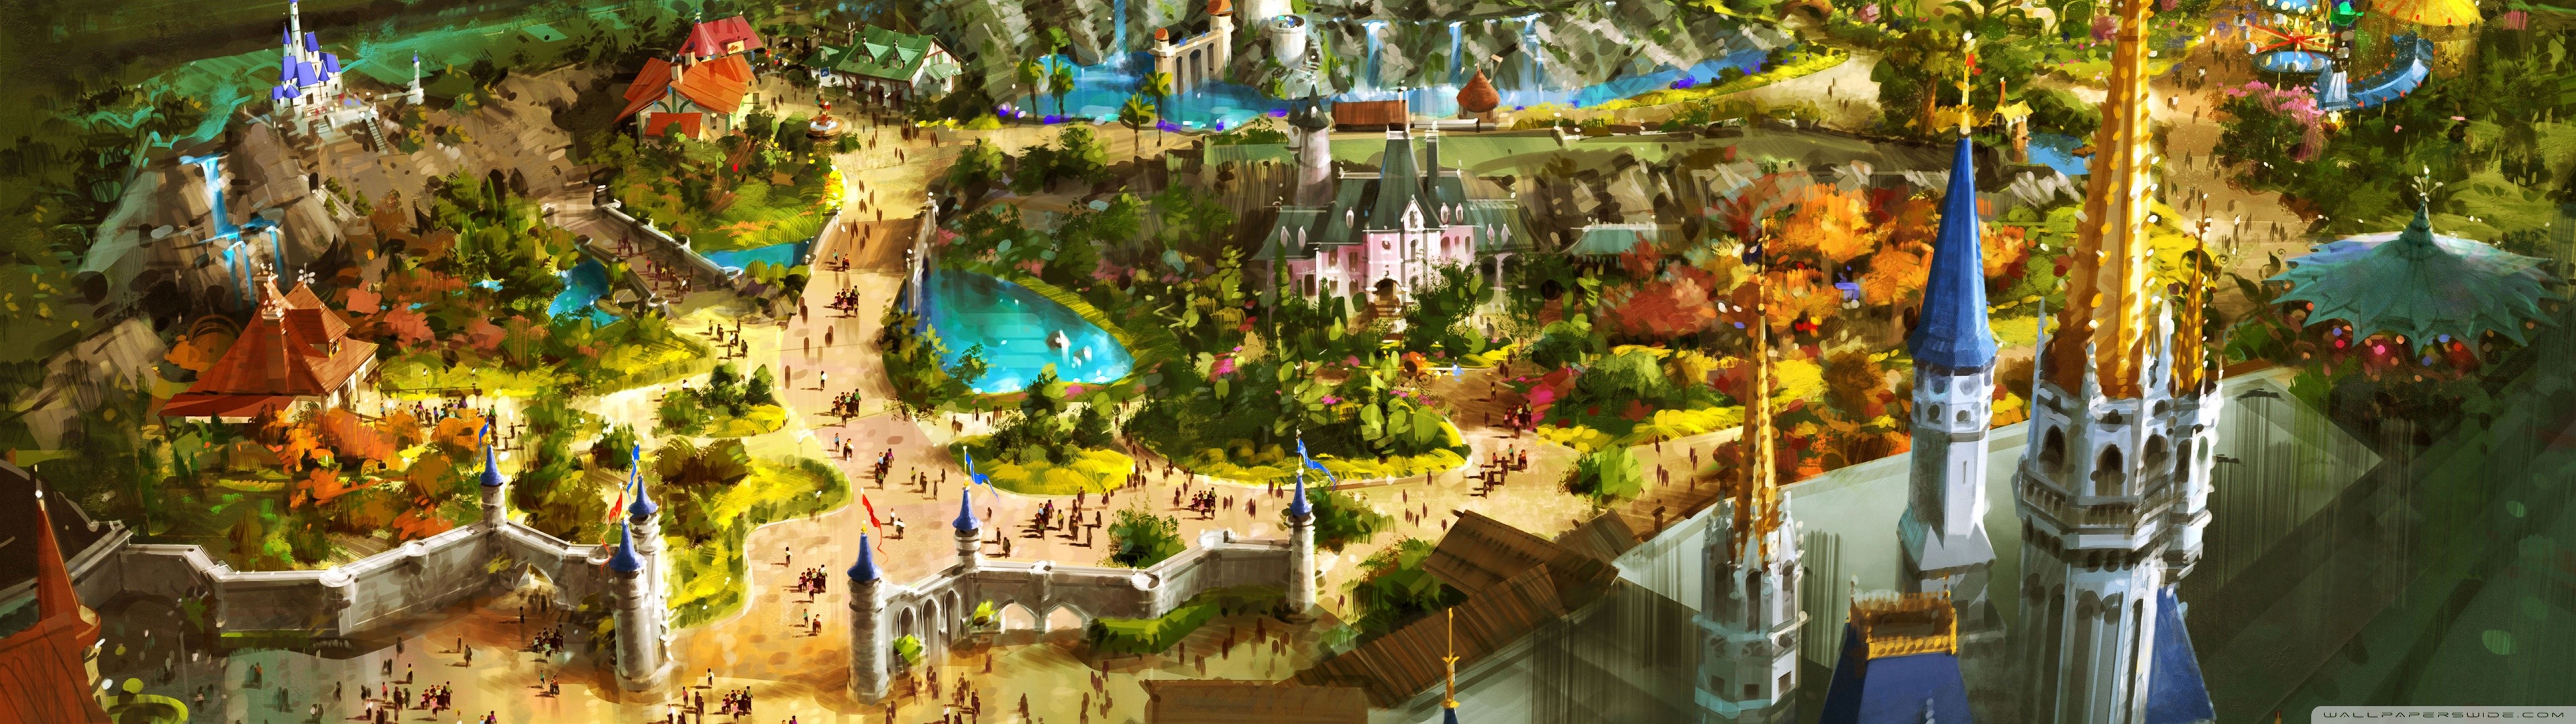 Dual Hd - Disney World Fantasyland Expansion - HD Wallpaper 